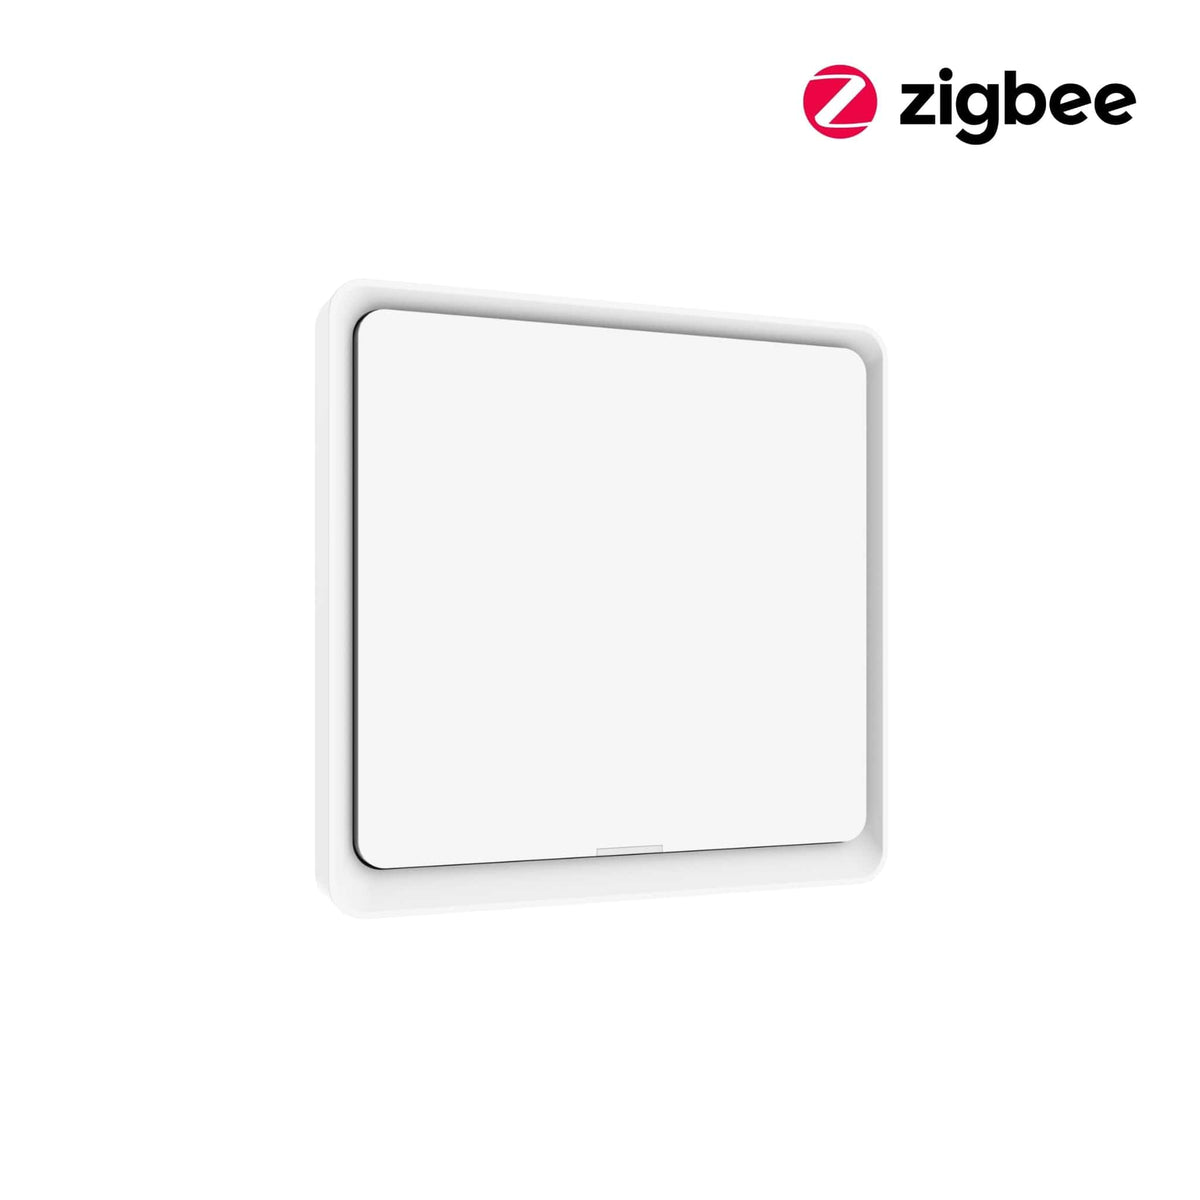 Hihome Hihome Zigbee wireless switch - 1 button WZB-SW1-1